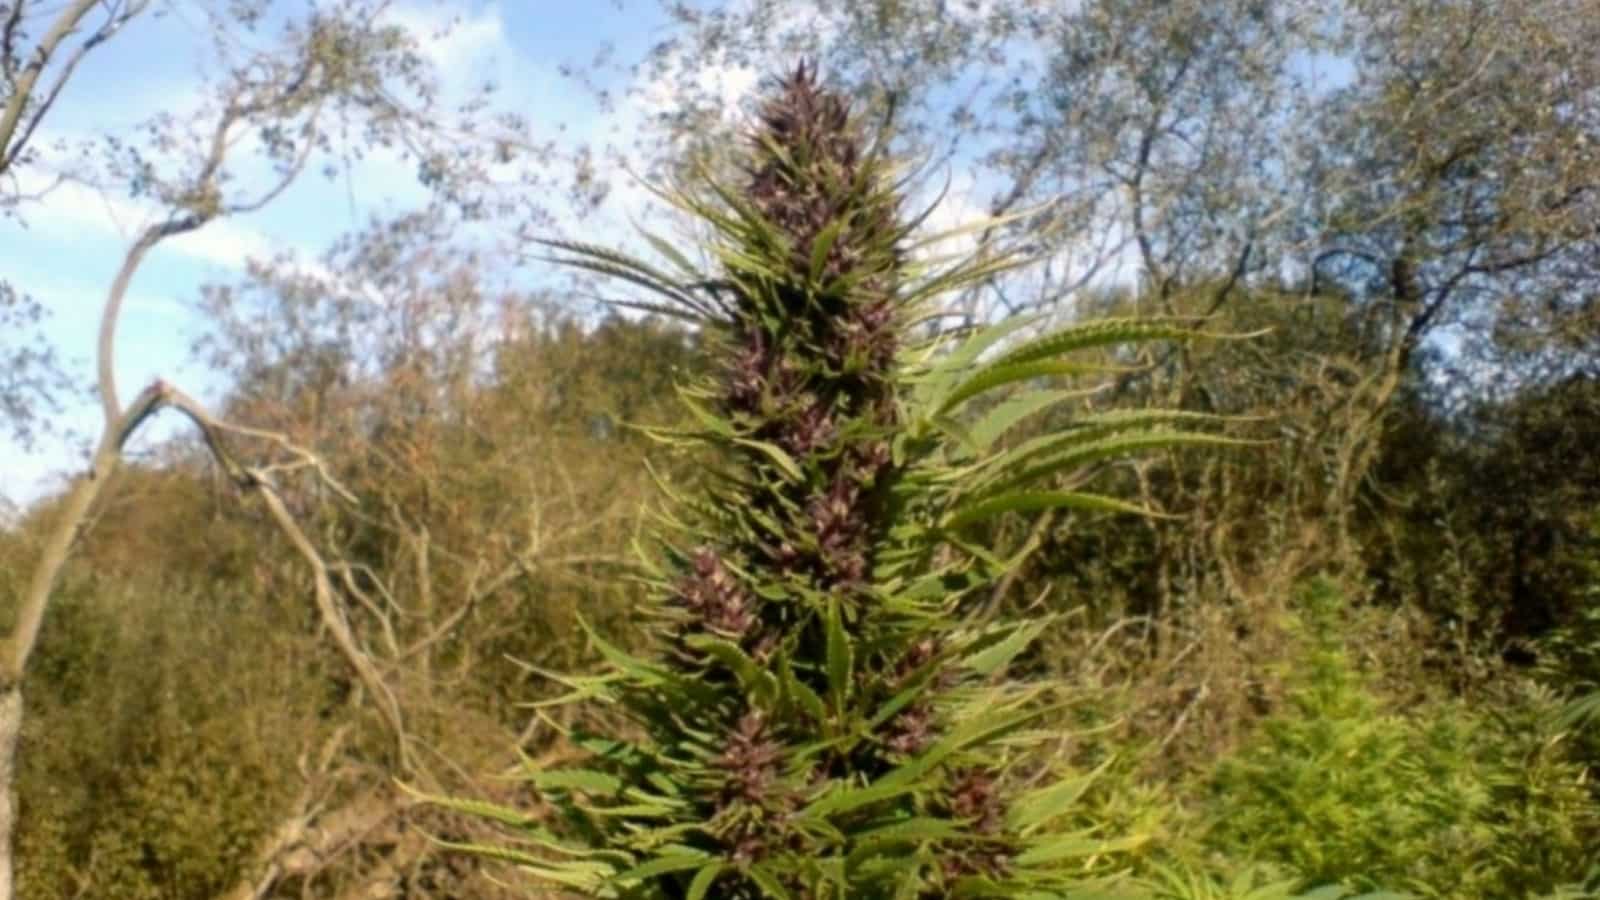 What is Australia's Bush Weed?